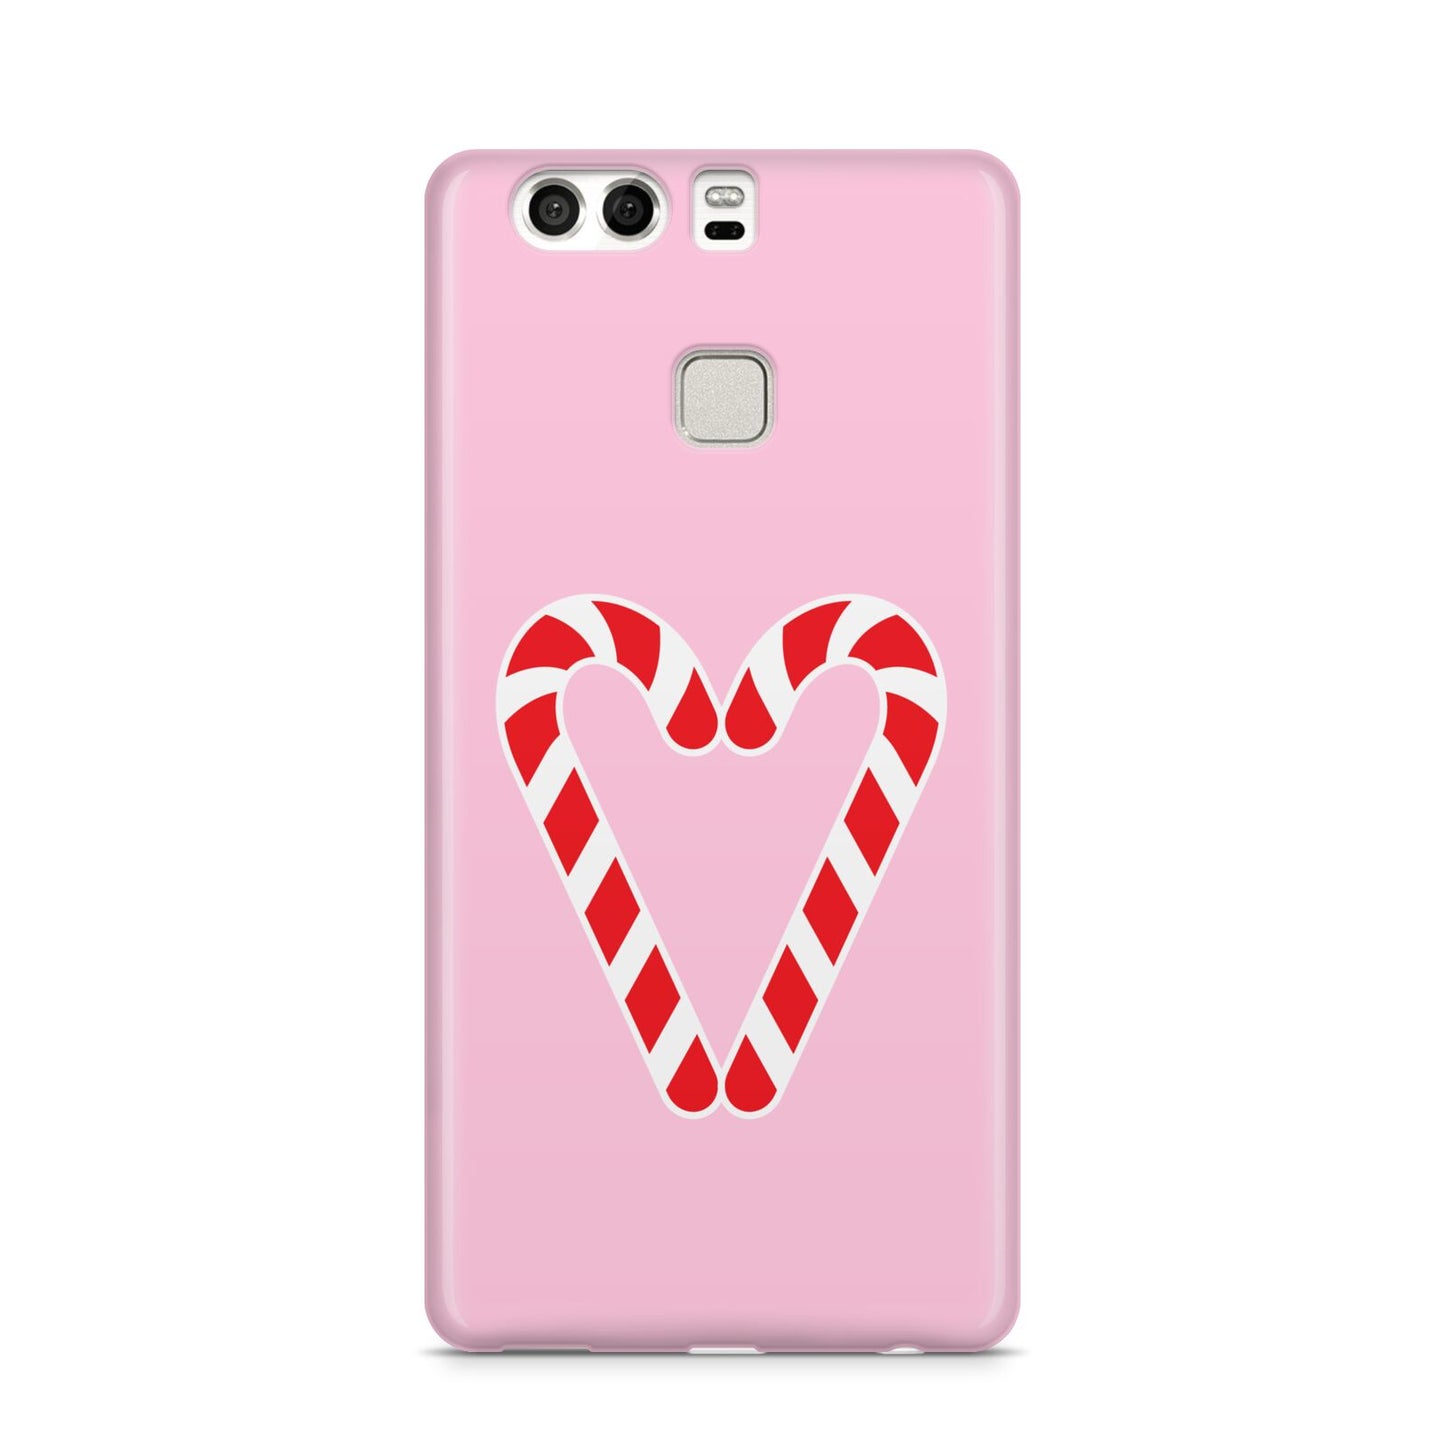 Candy Cane Heart Huawei P9 Case